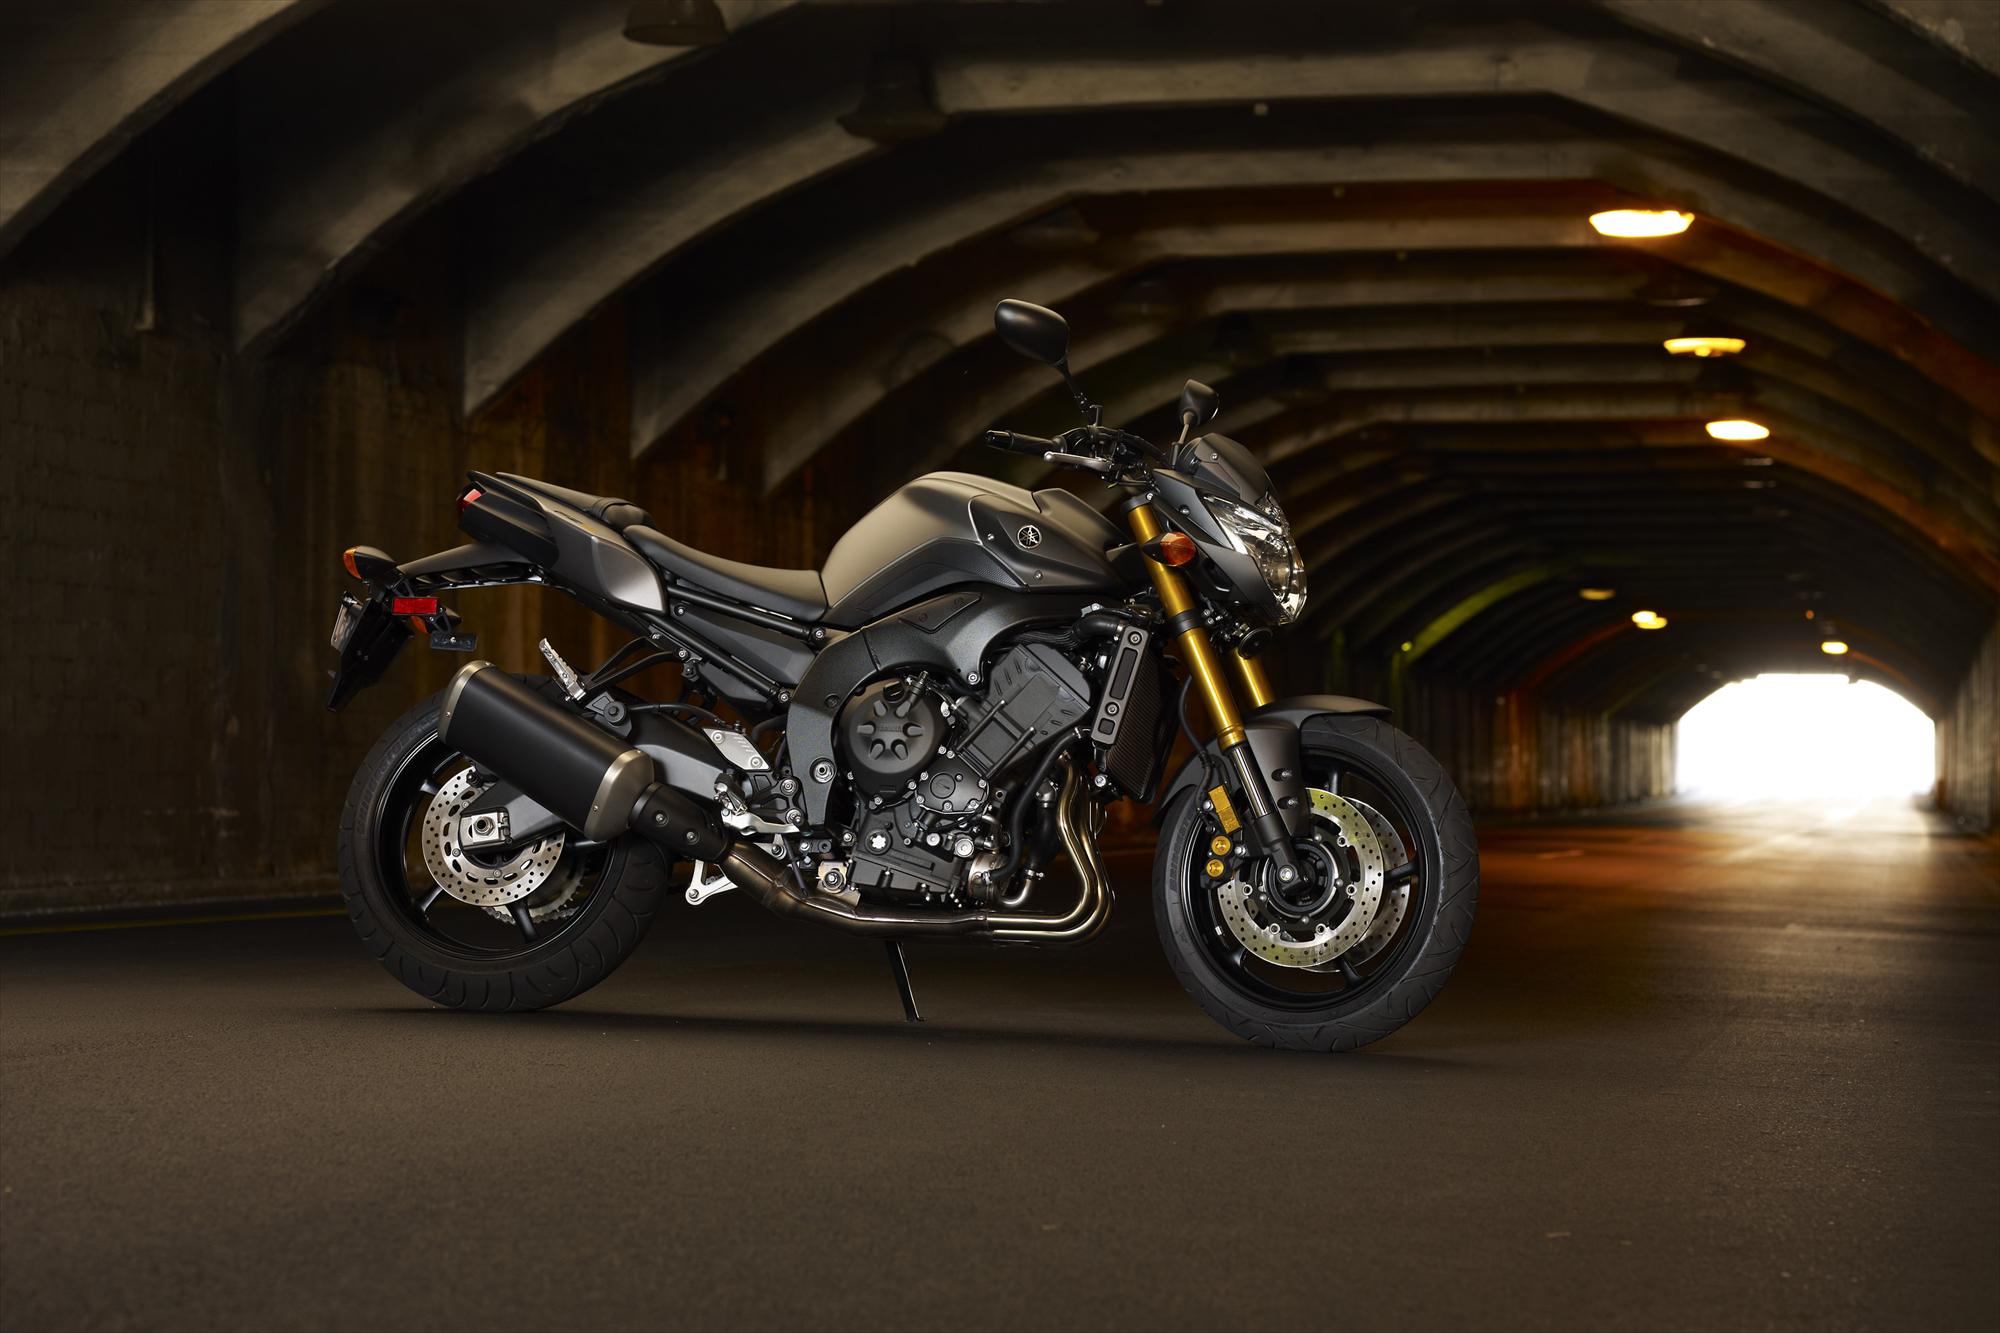 Мотоцикл ямаха fz8 - классический дорожный мотоцик